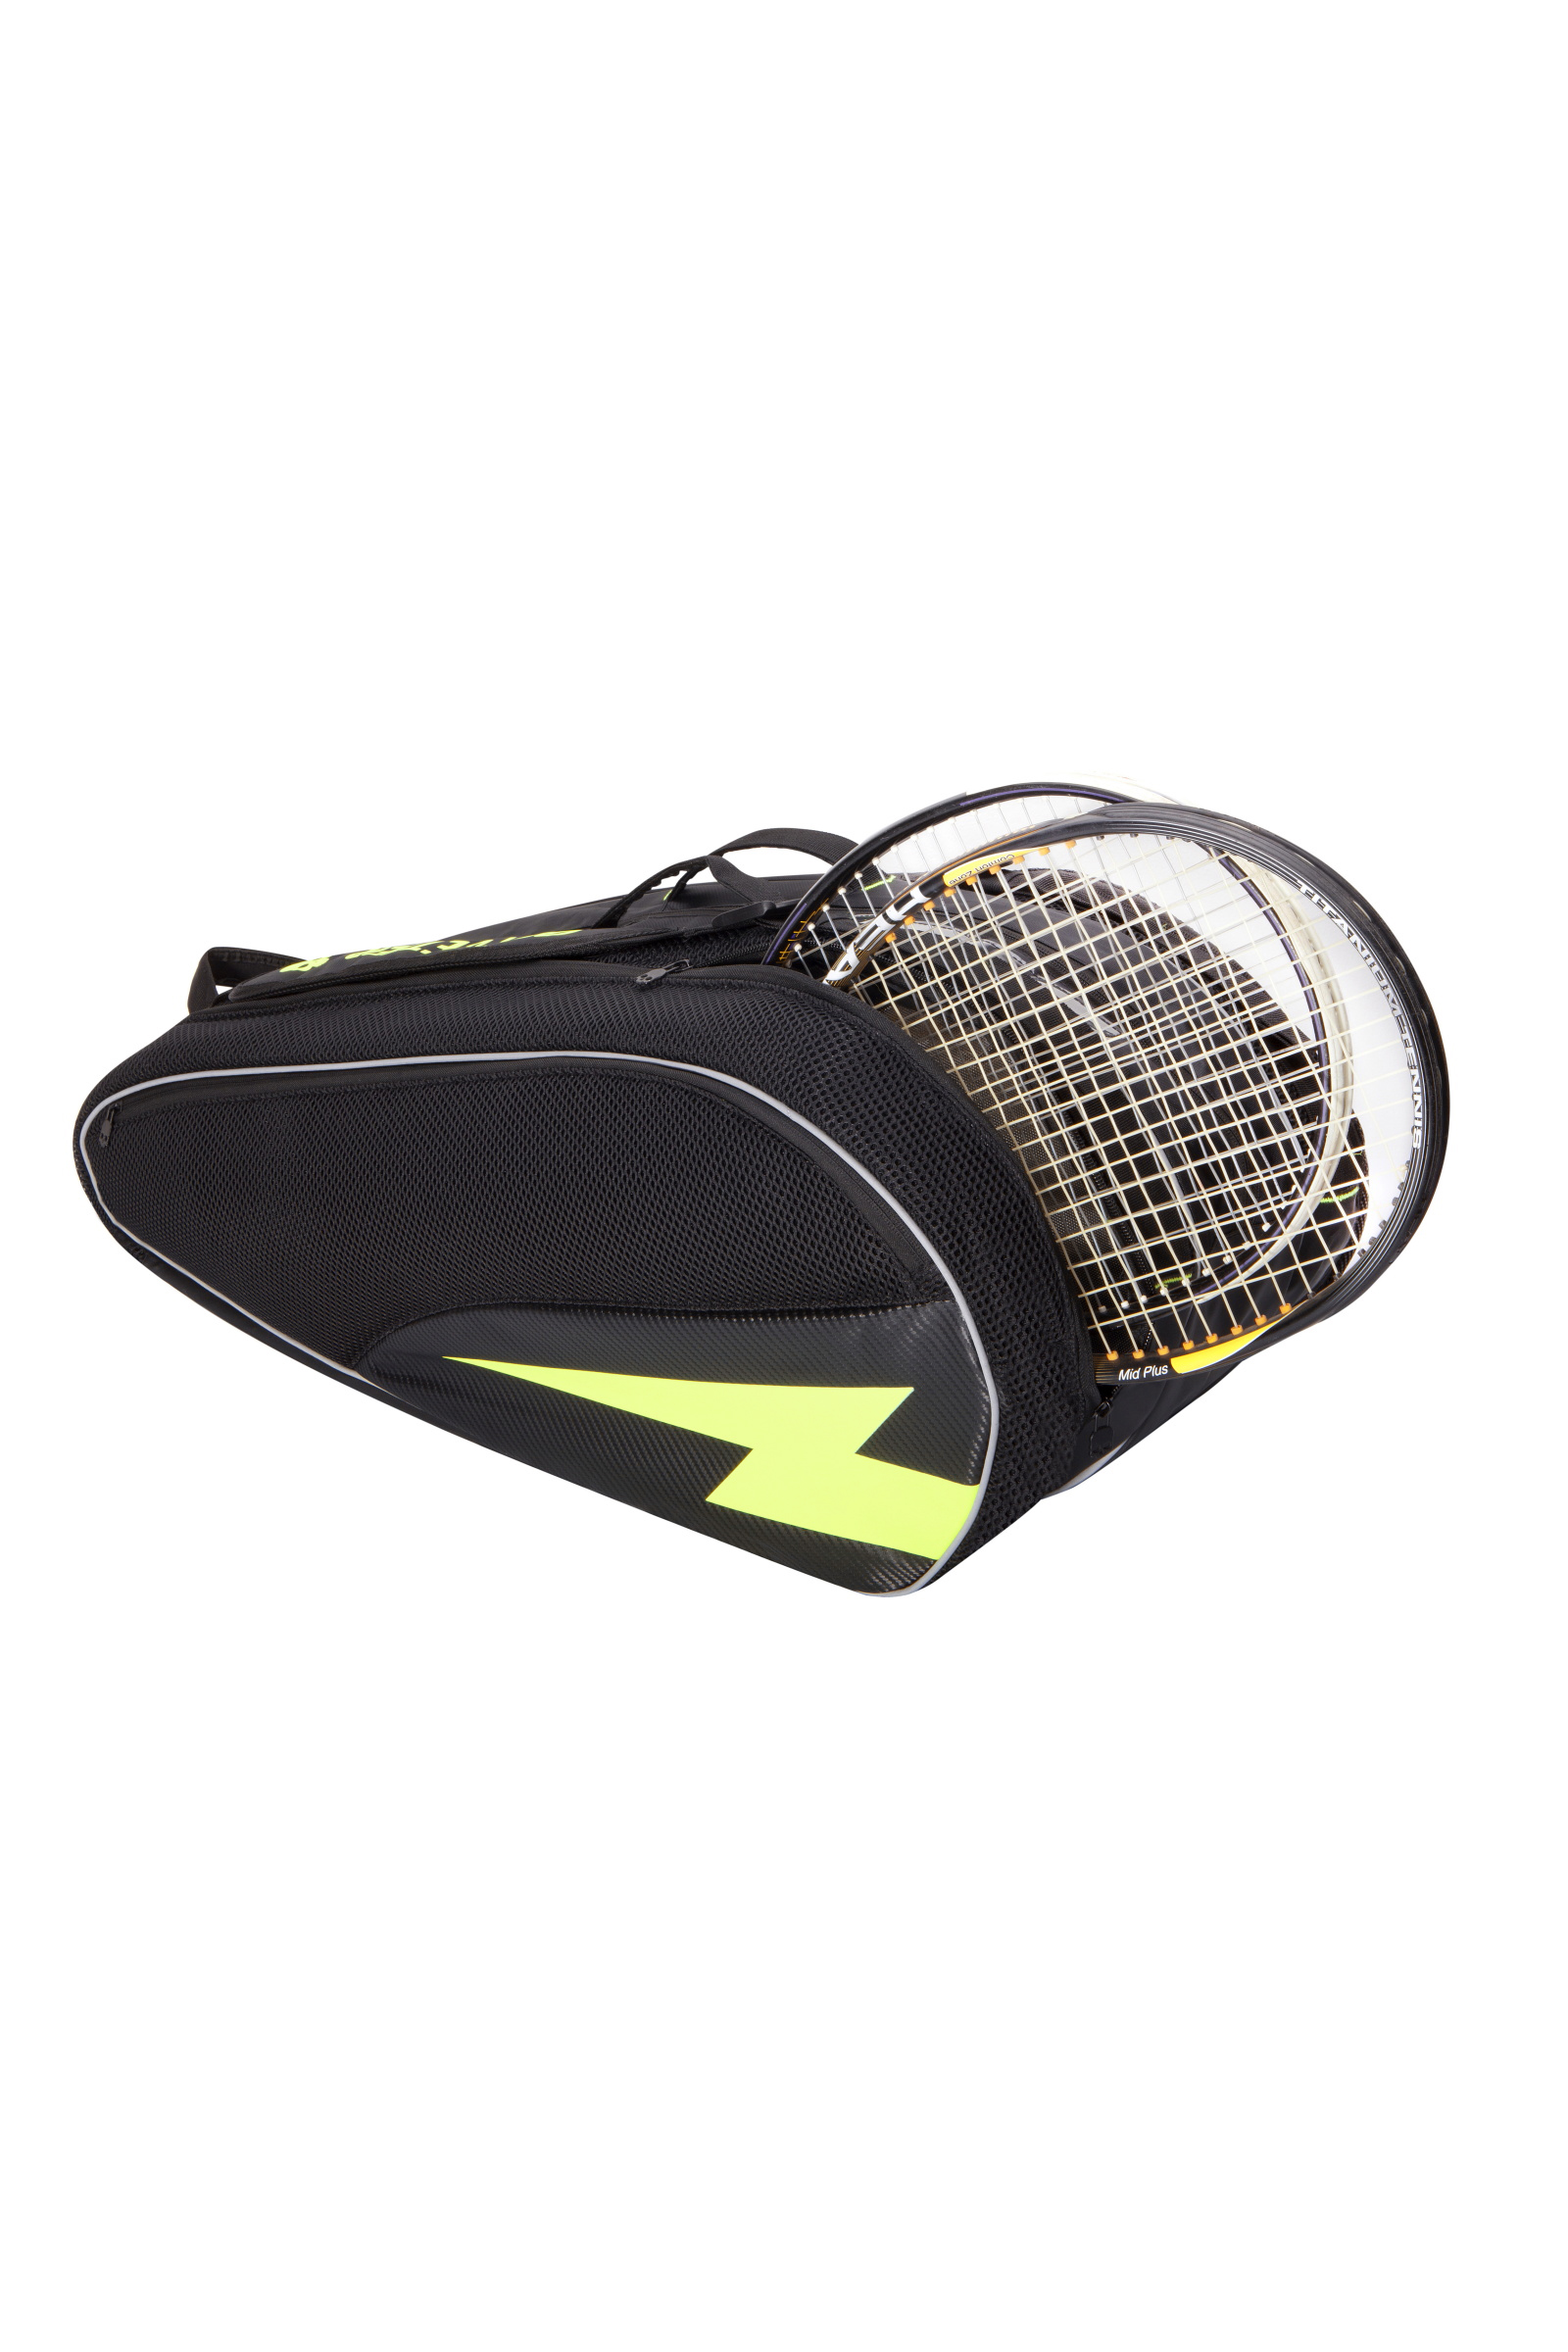 TENNIS BAG (12 rackets) - BLACK - Abbigliamento sportivo | Hydrogen